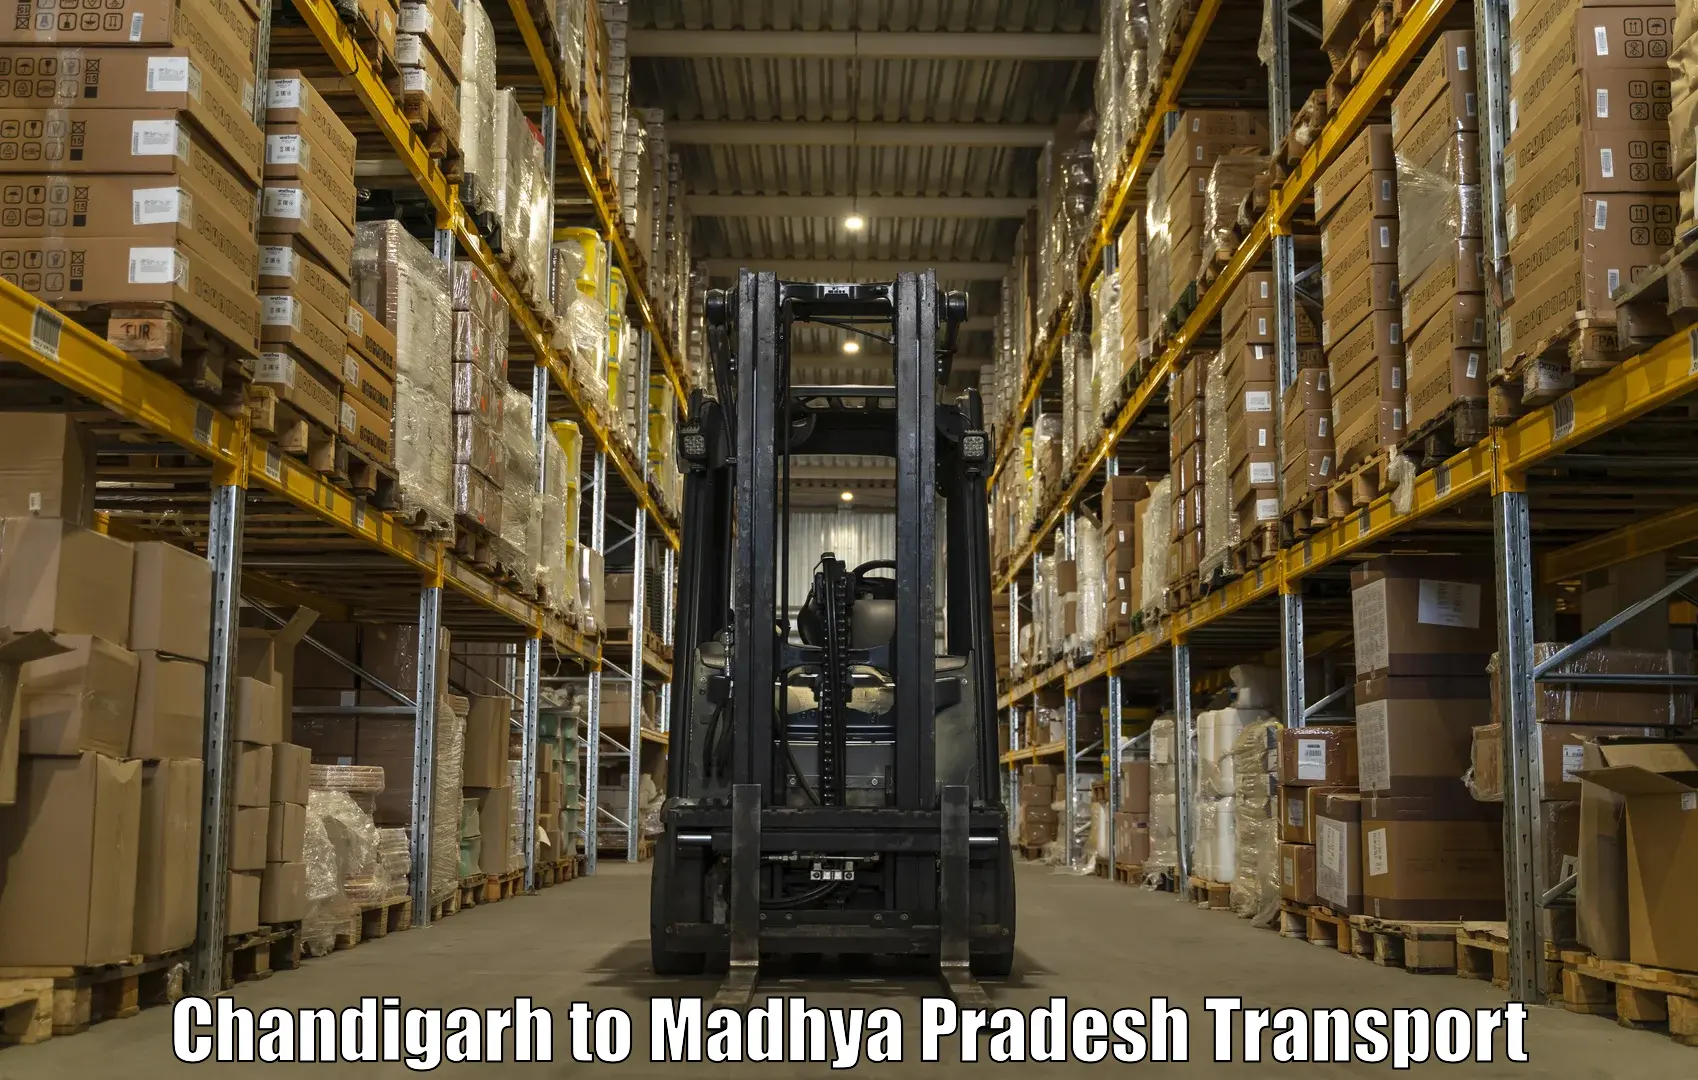 Truck transport companies in India Chandigarh to Gosalpur